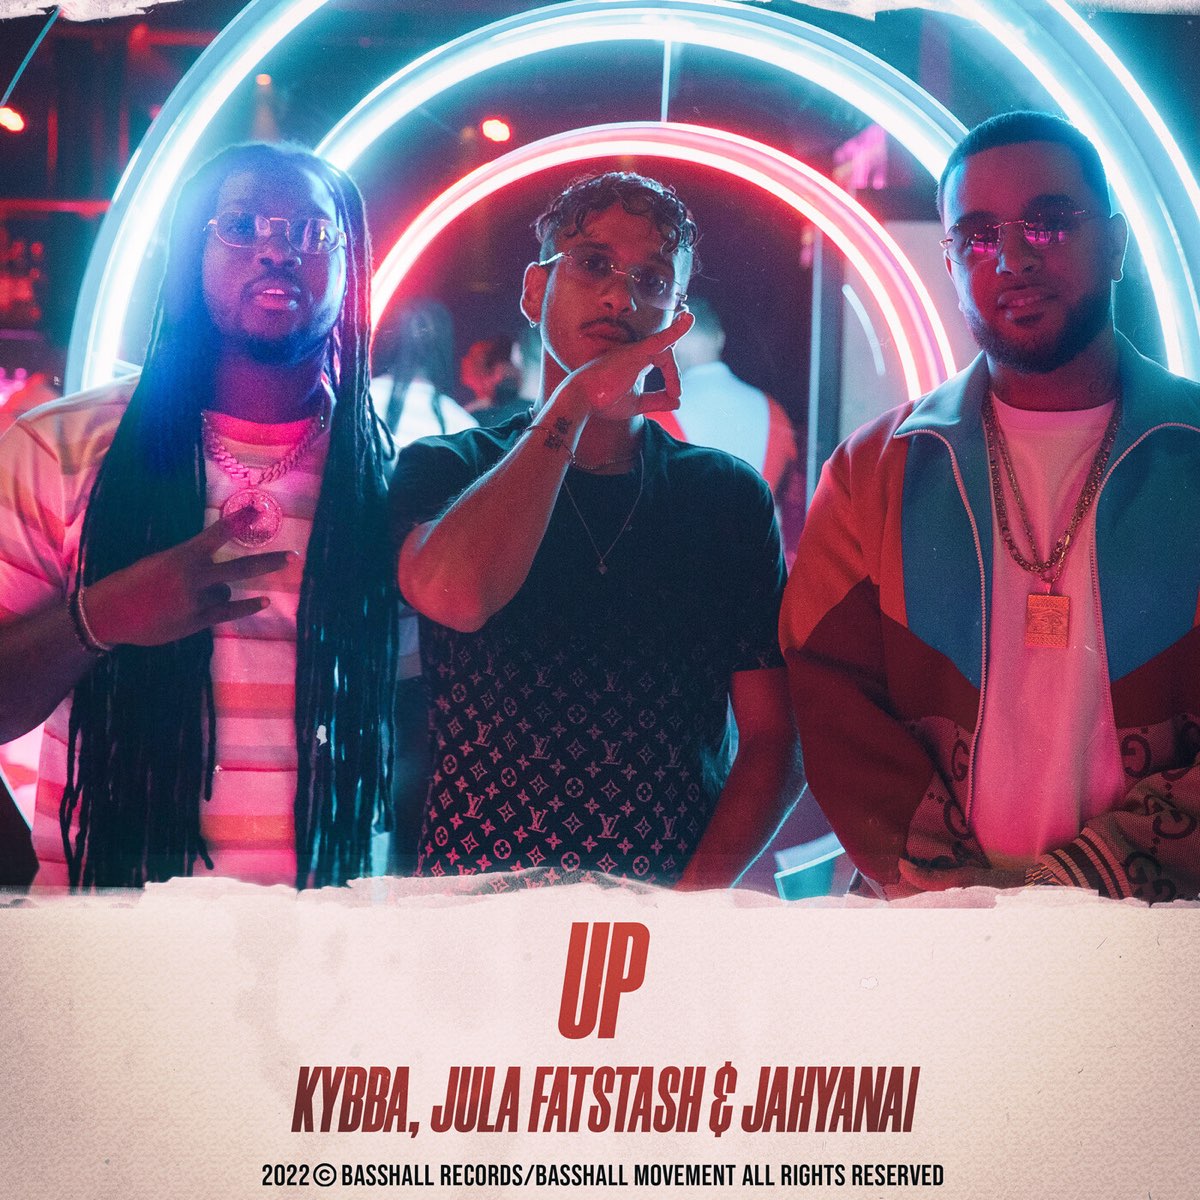 UP - Single - Album by Kybba, Jula Fatstash & Jahyanai - Apple Music